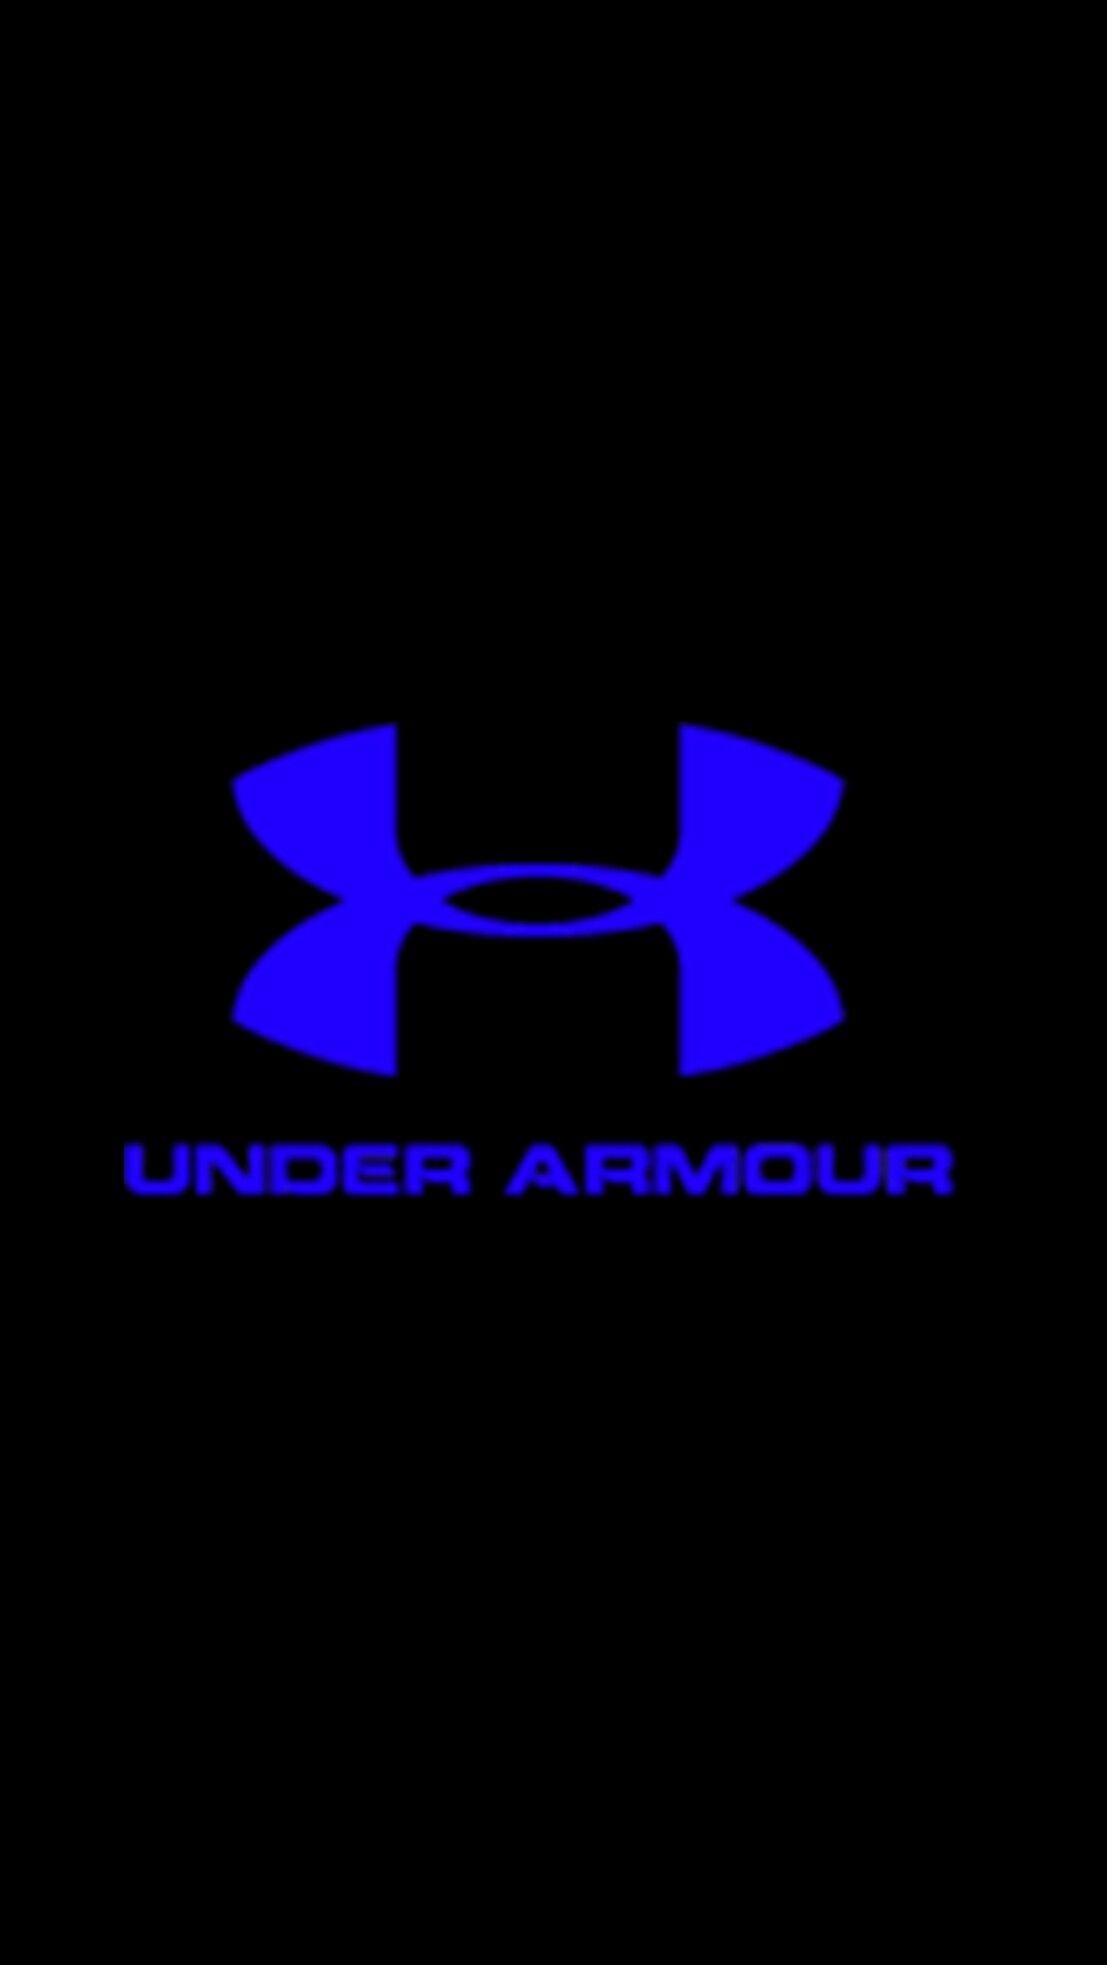 underarmour #dbz #naruto #university #iphone wallpaper #android wallpaper. Under armour logo, Under armour wallpaper, Under armour